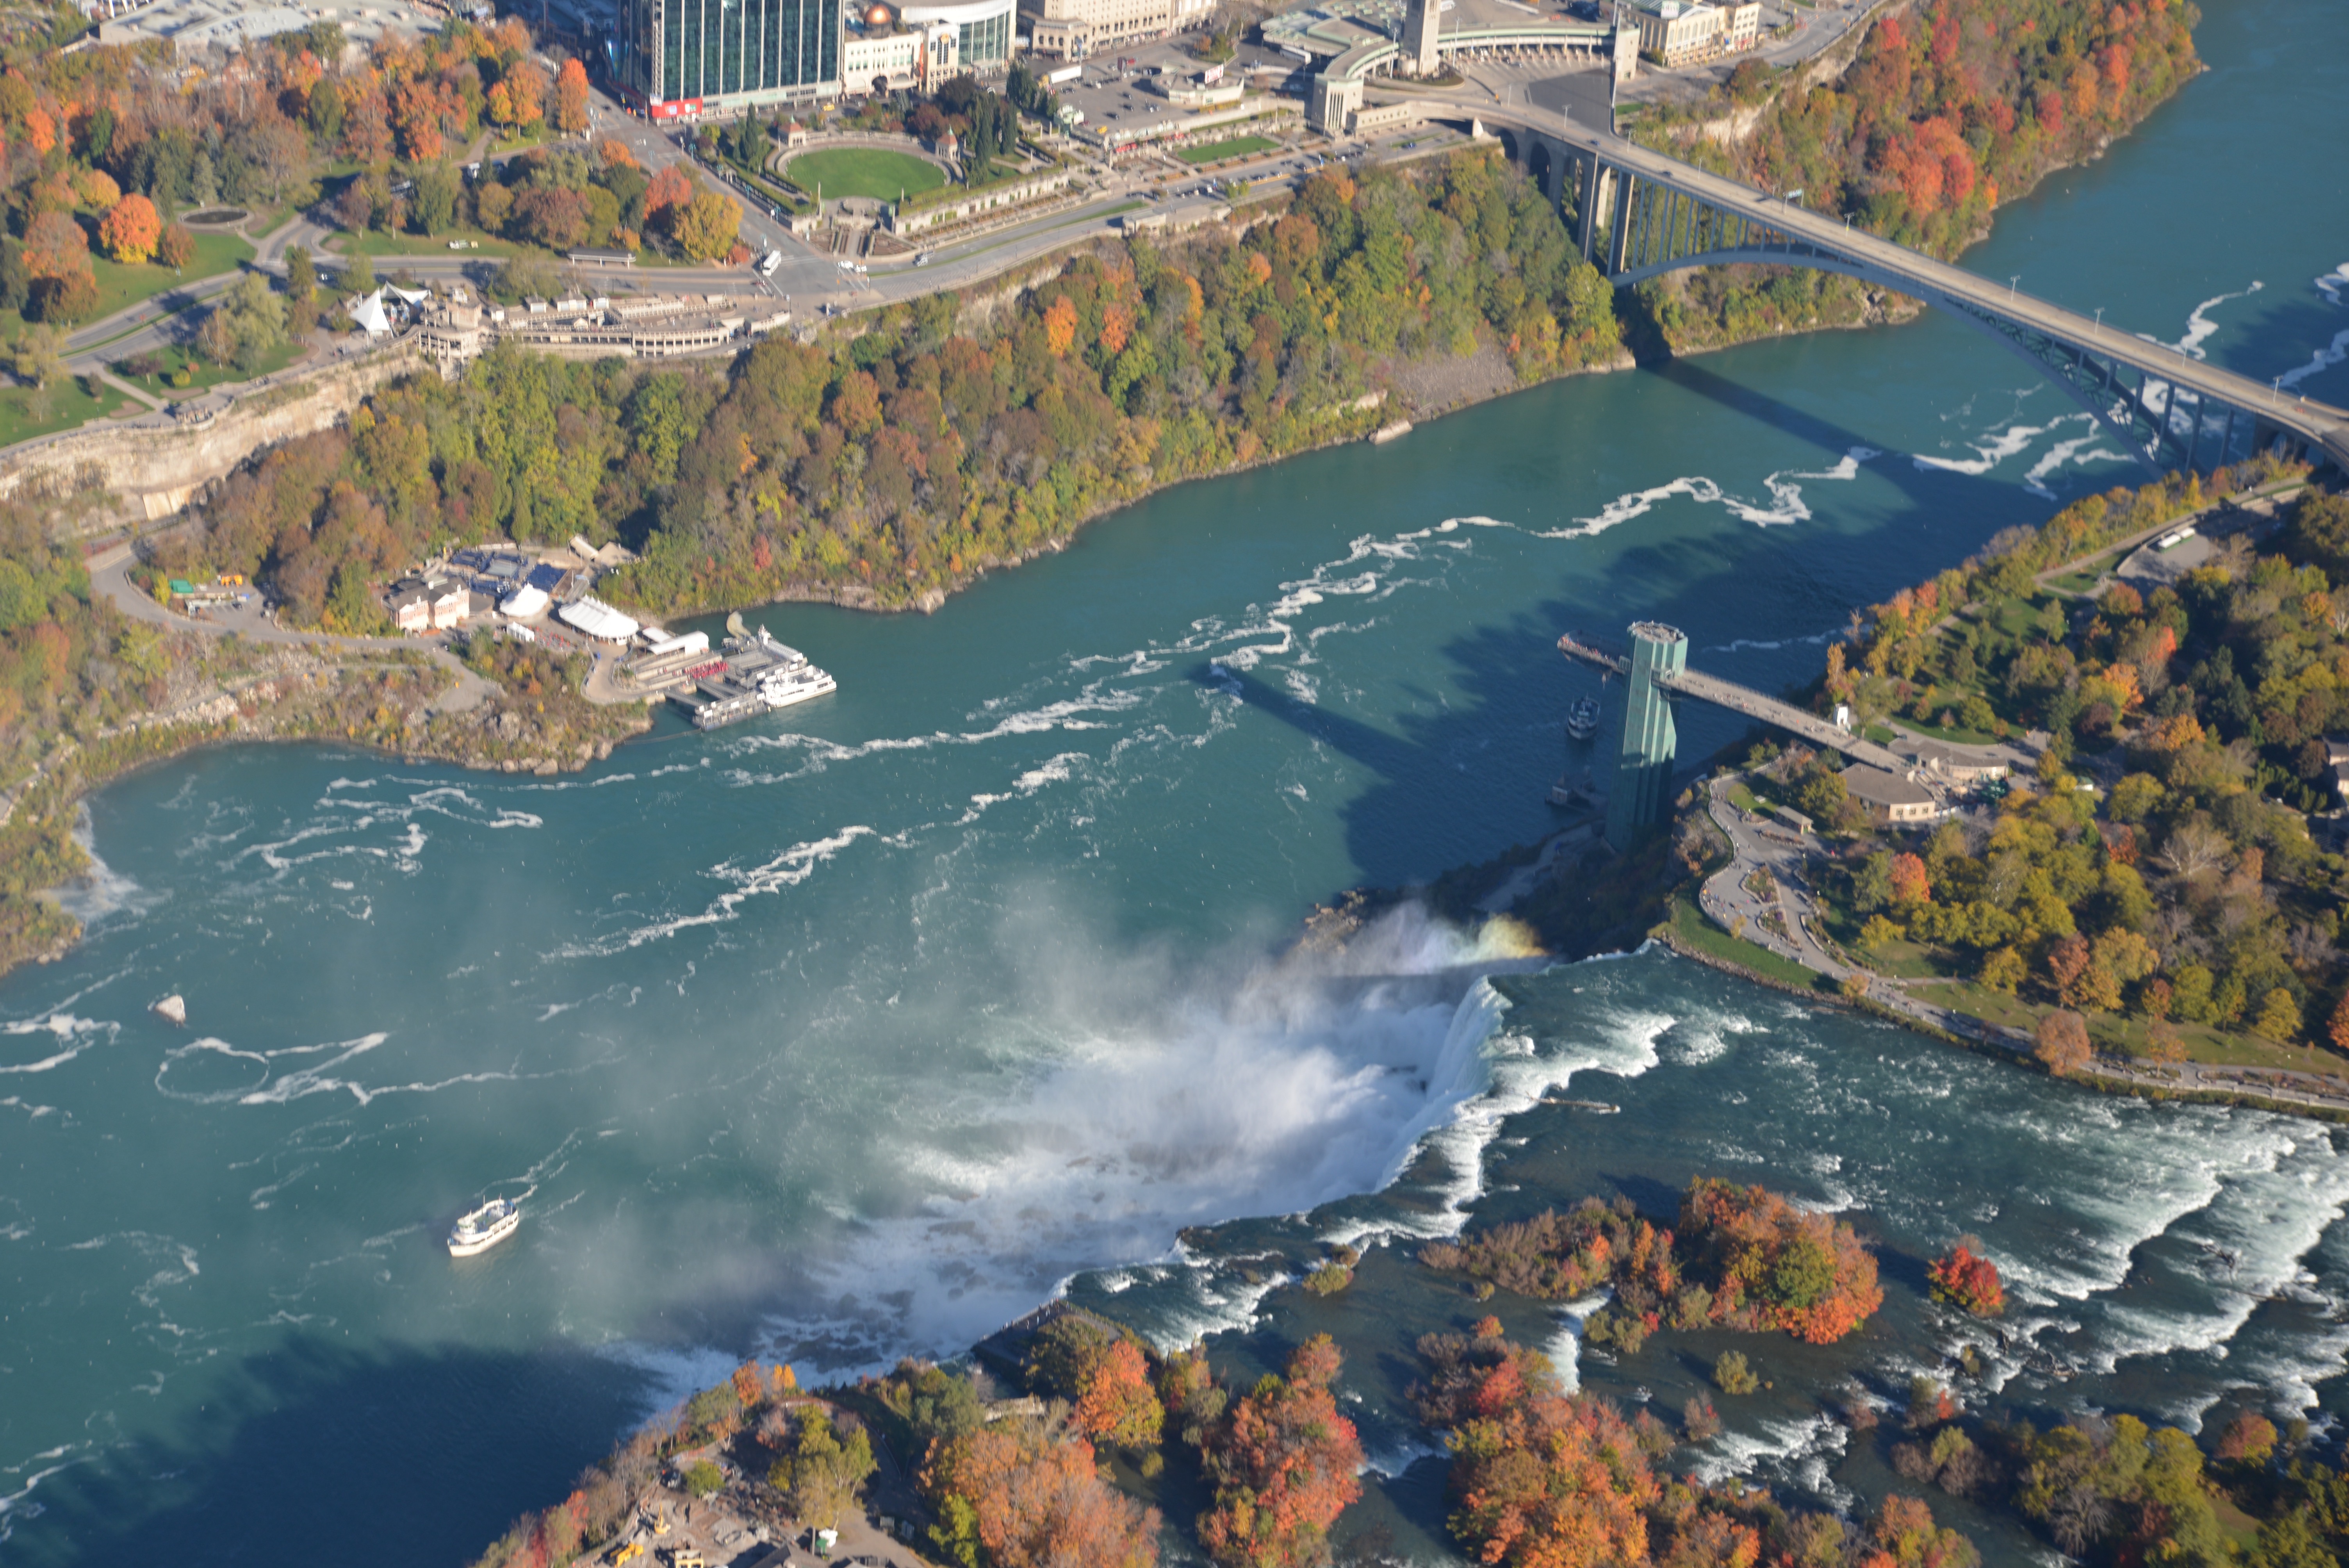 Niagara Falls 5